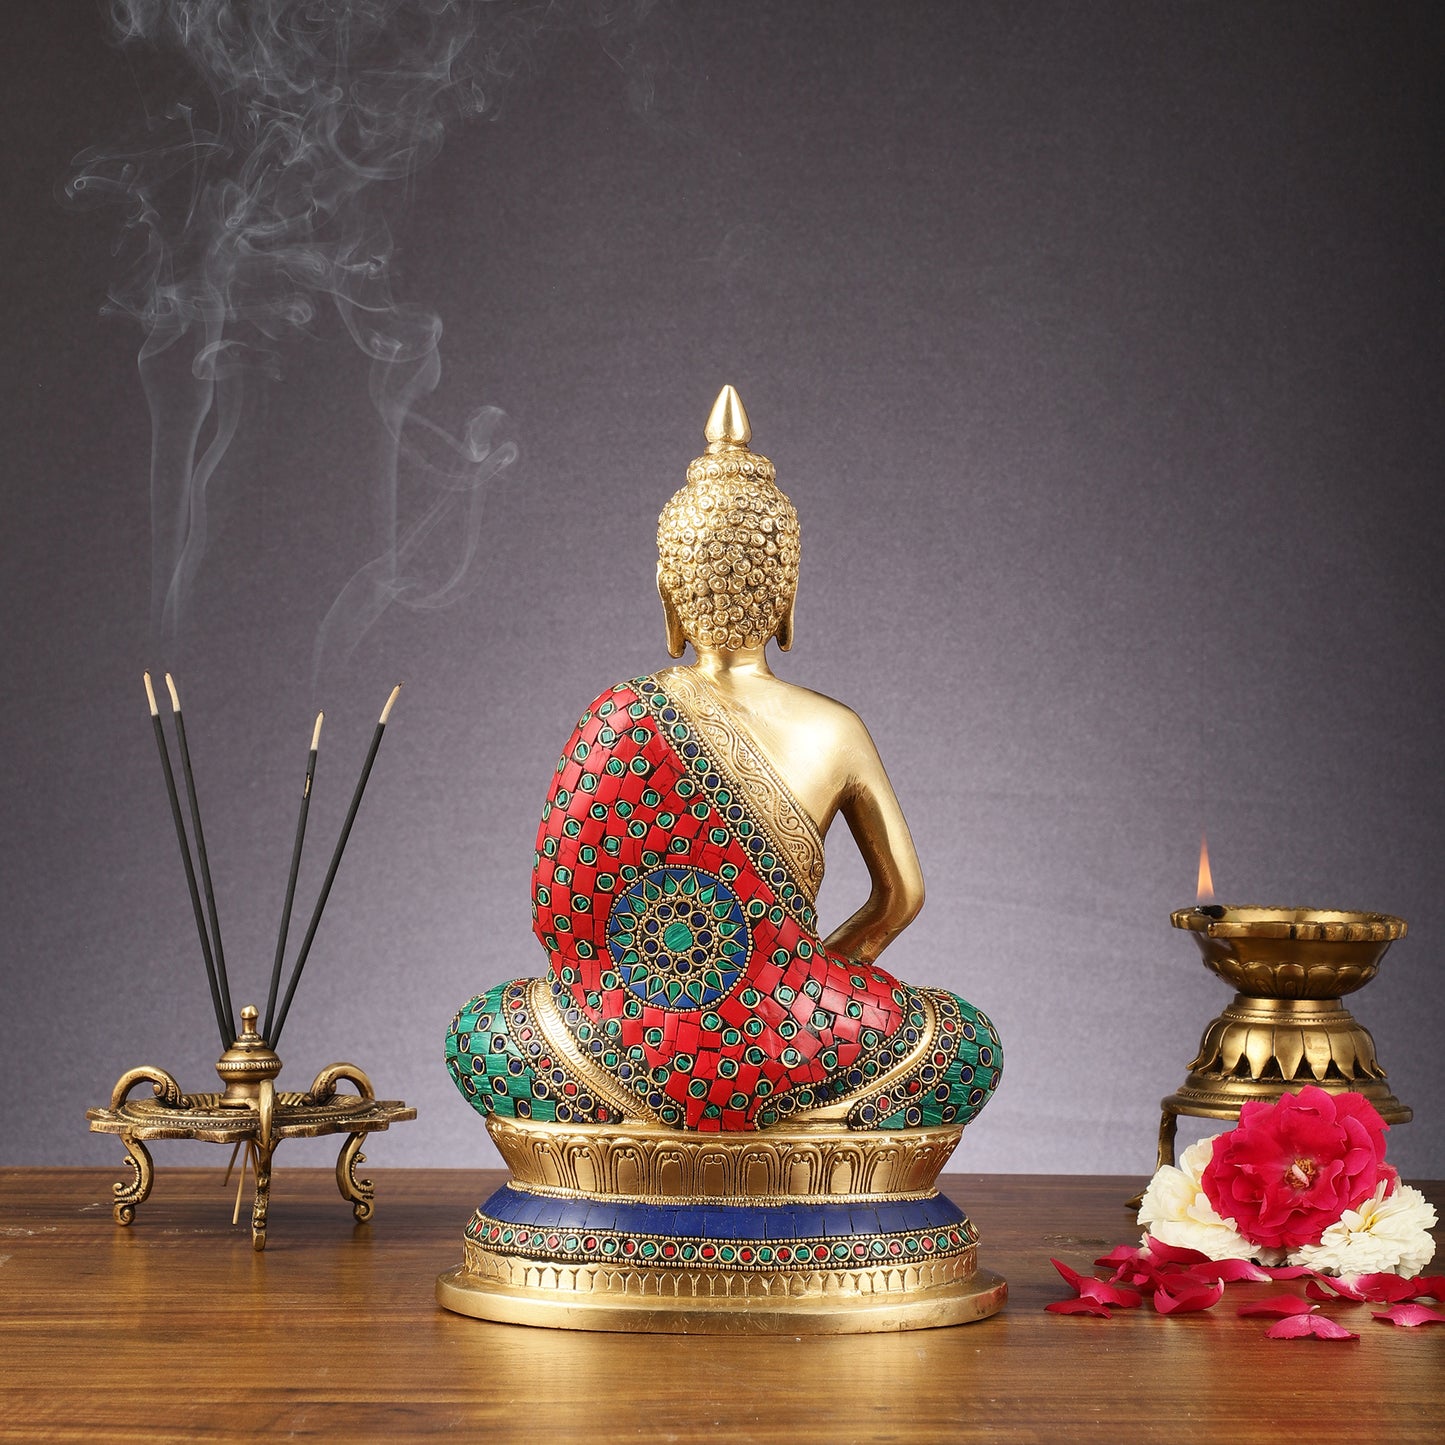 Handcrafted Meditation Buddha Idol - Cambodian Style